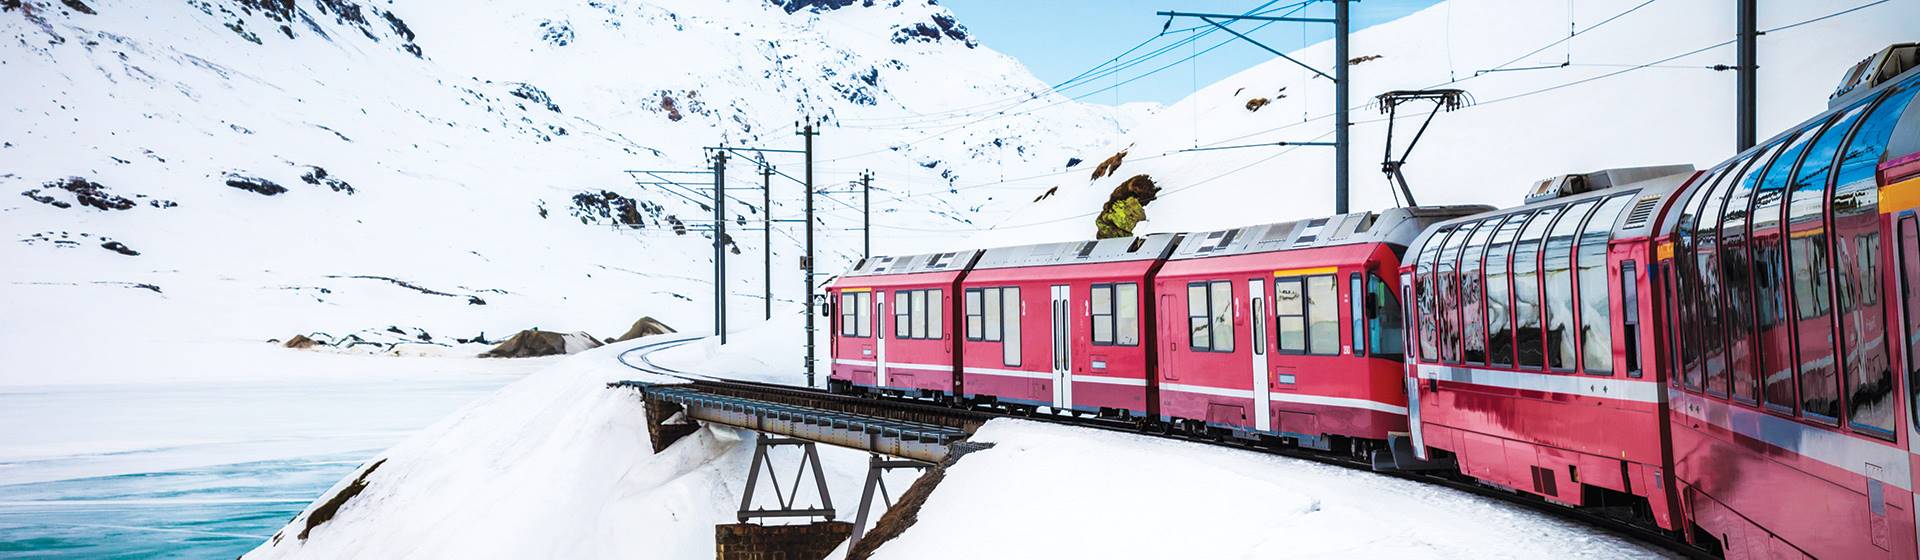 Winter Wonderland on the Swiss Glacier Express 